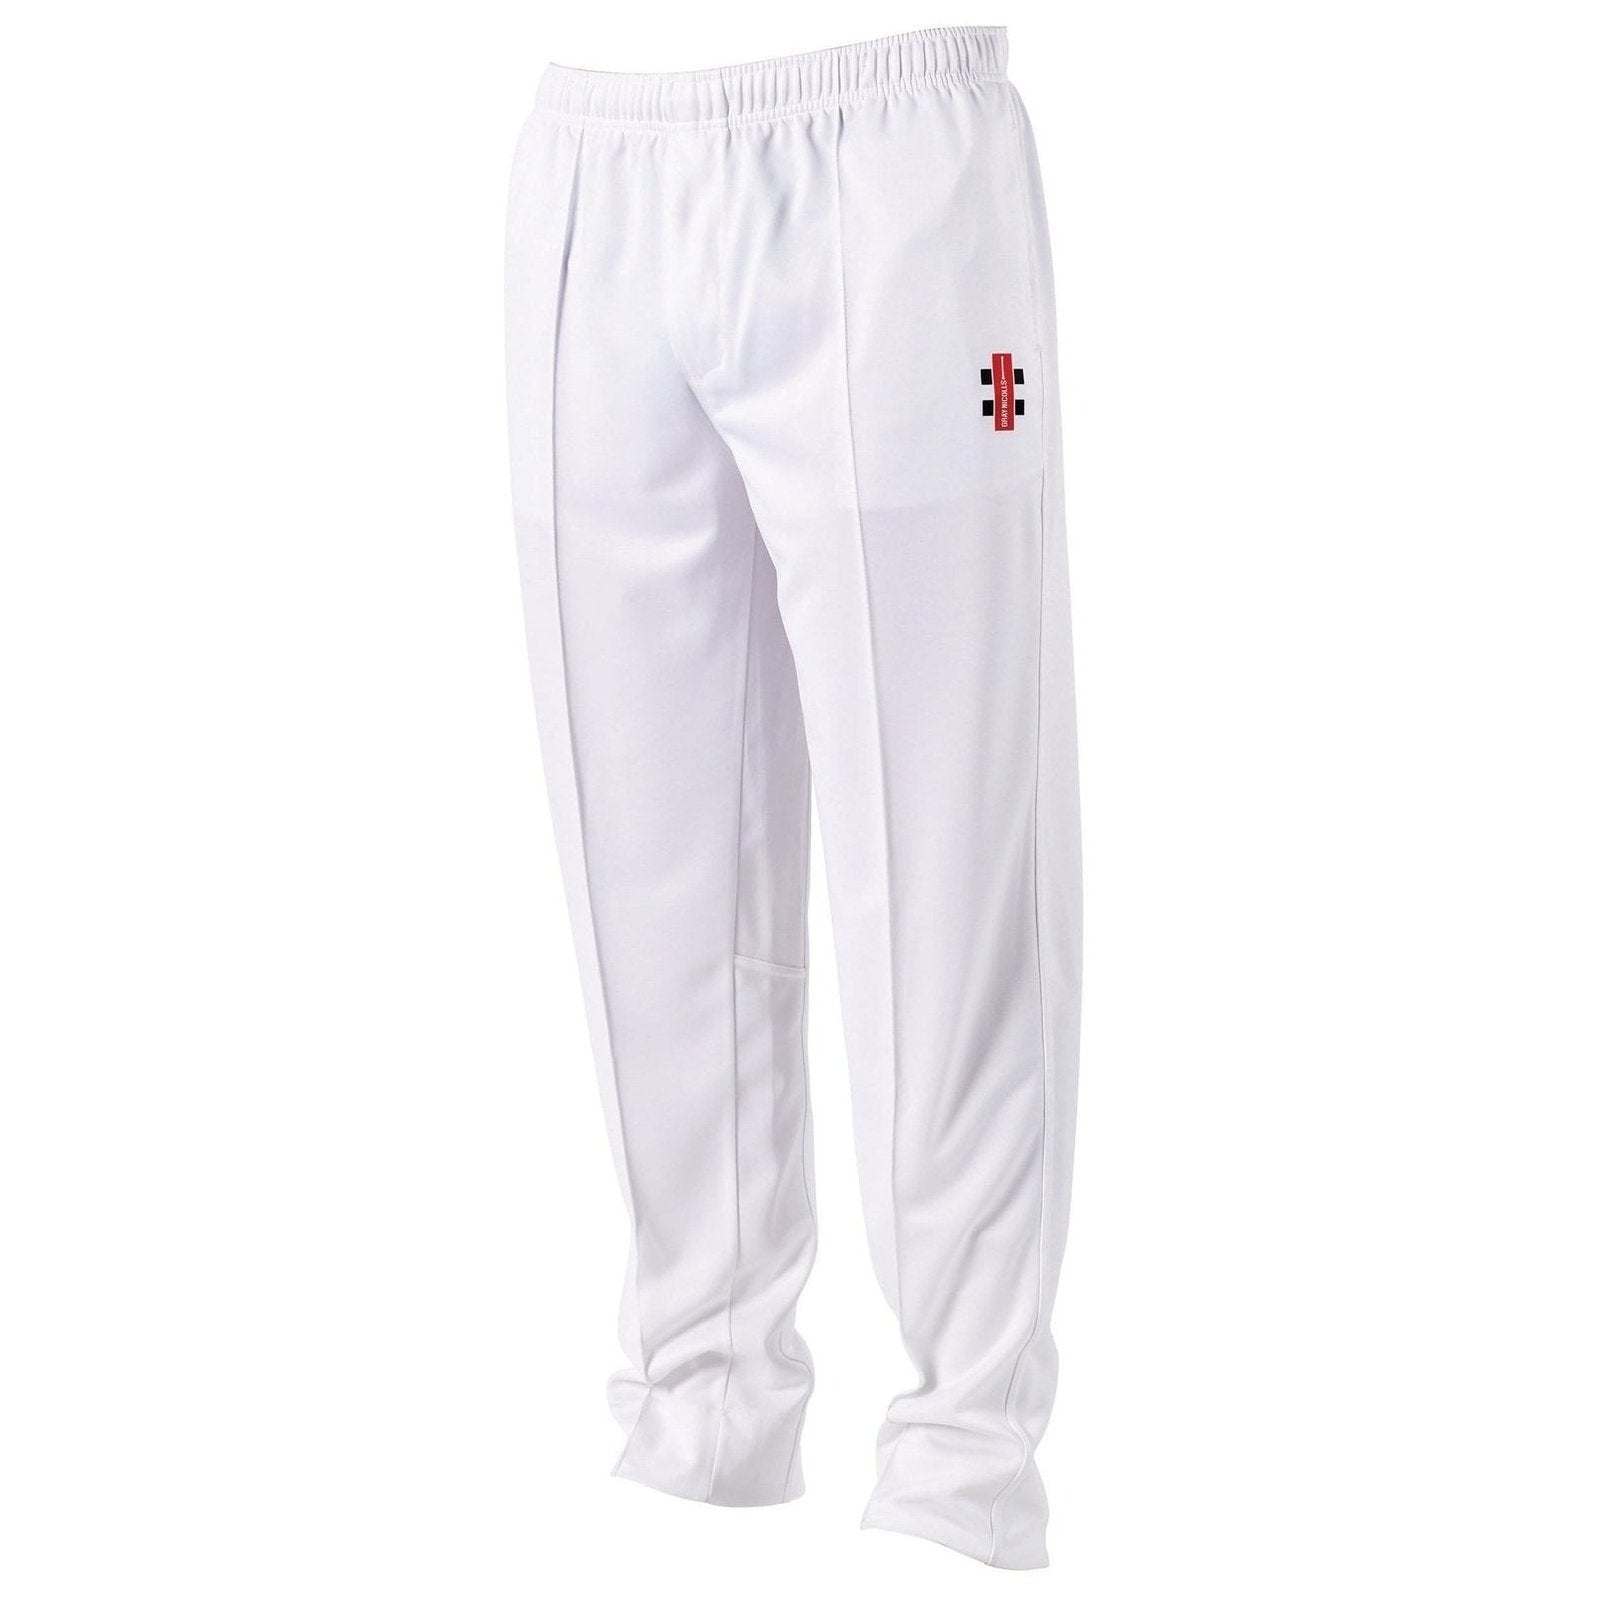 Gray Nicolls Clothing 10 Gray-Nicolls Select (ISeconds) Cricket Trousers